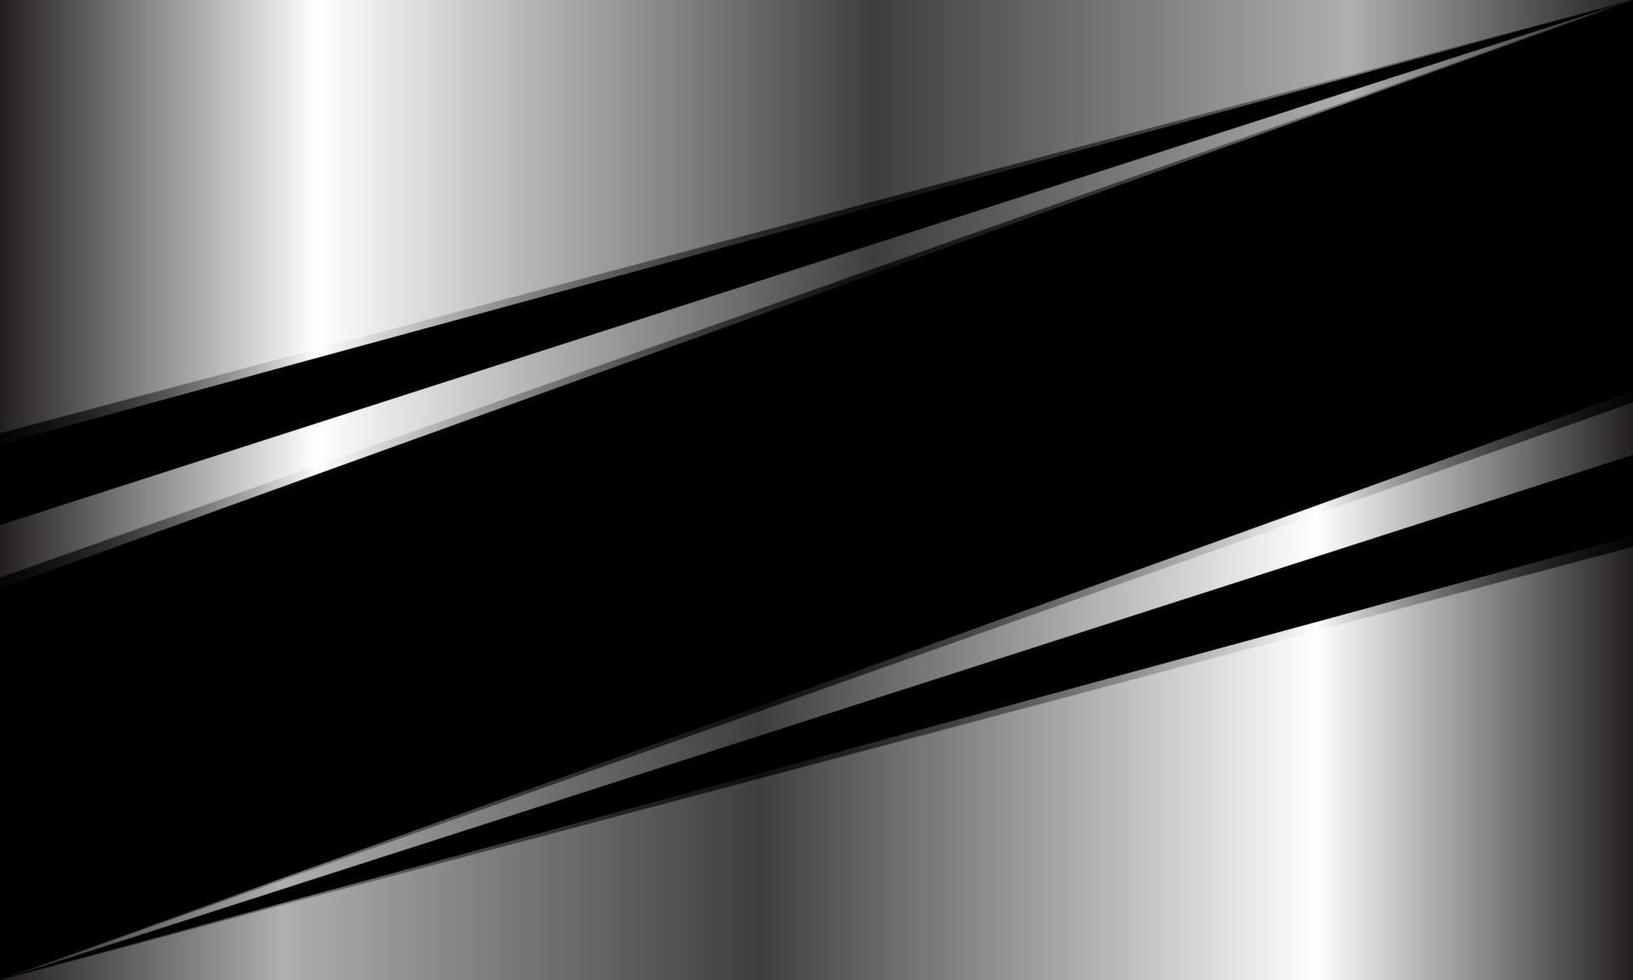 abstrakt svart banner linje snedstreck på silver triangel geometrisk design modern lyx futuristisk bakgrund vektorillustration. vektor